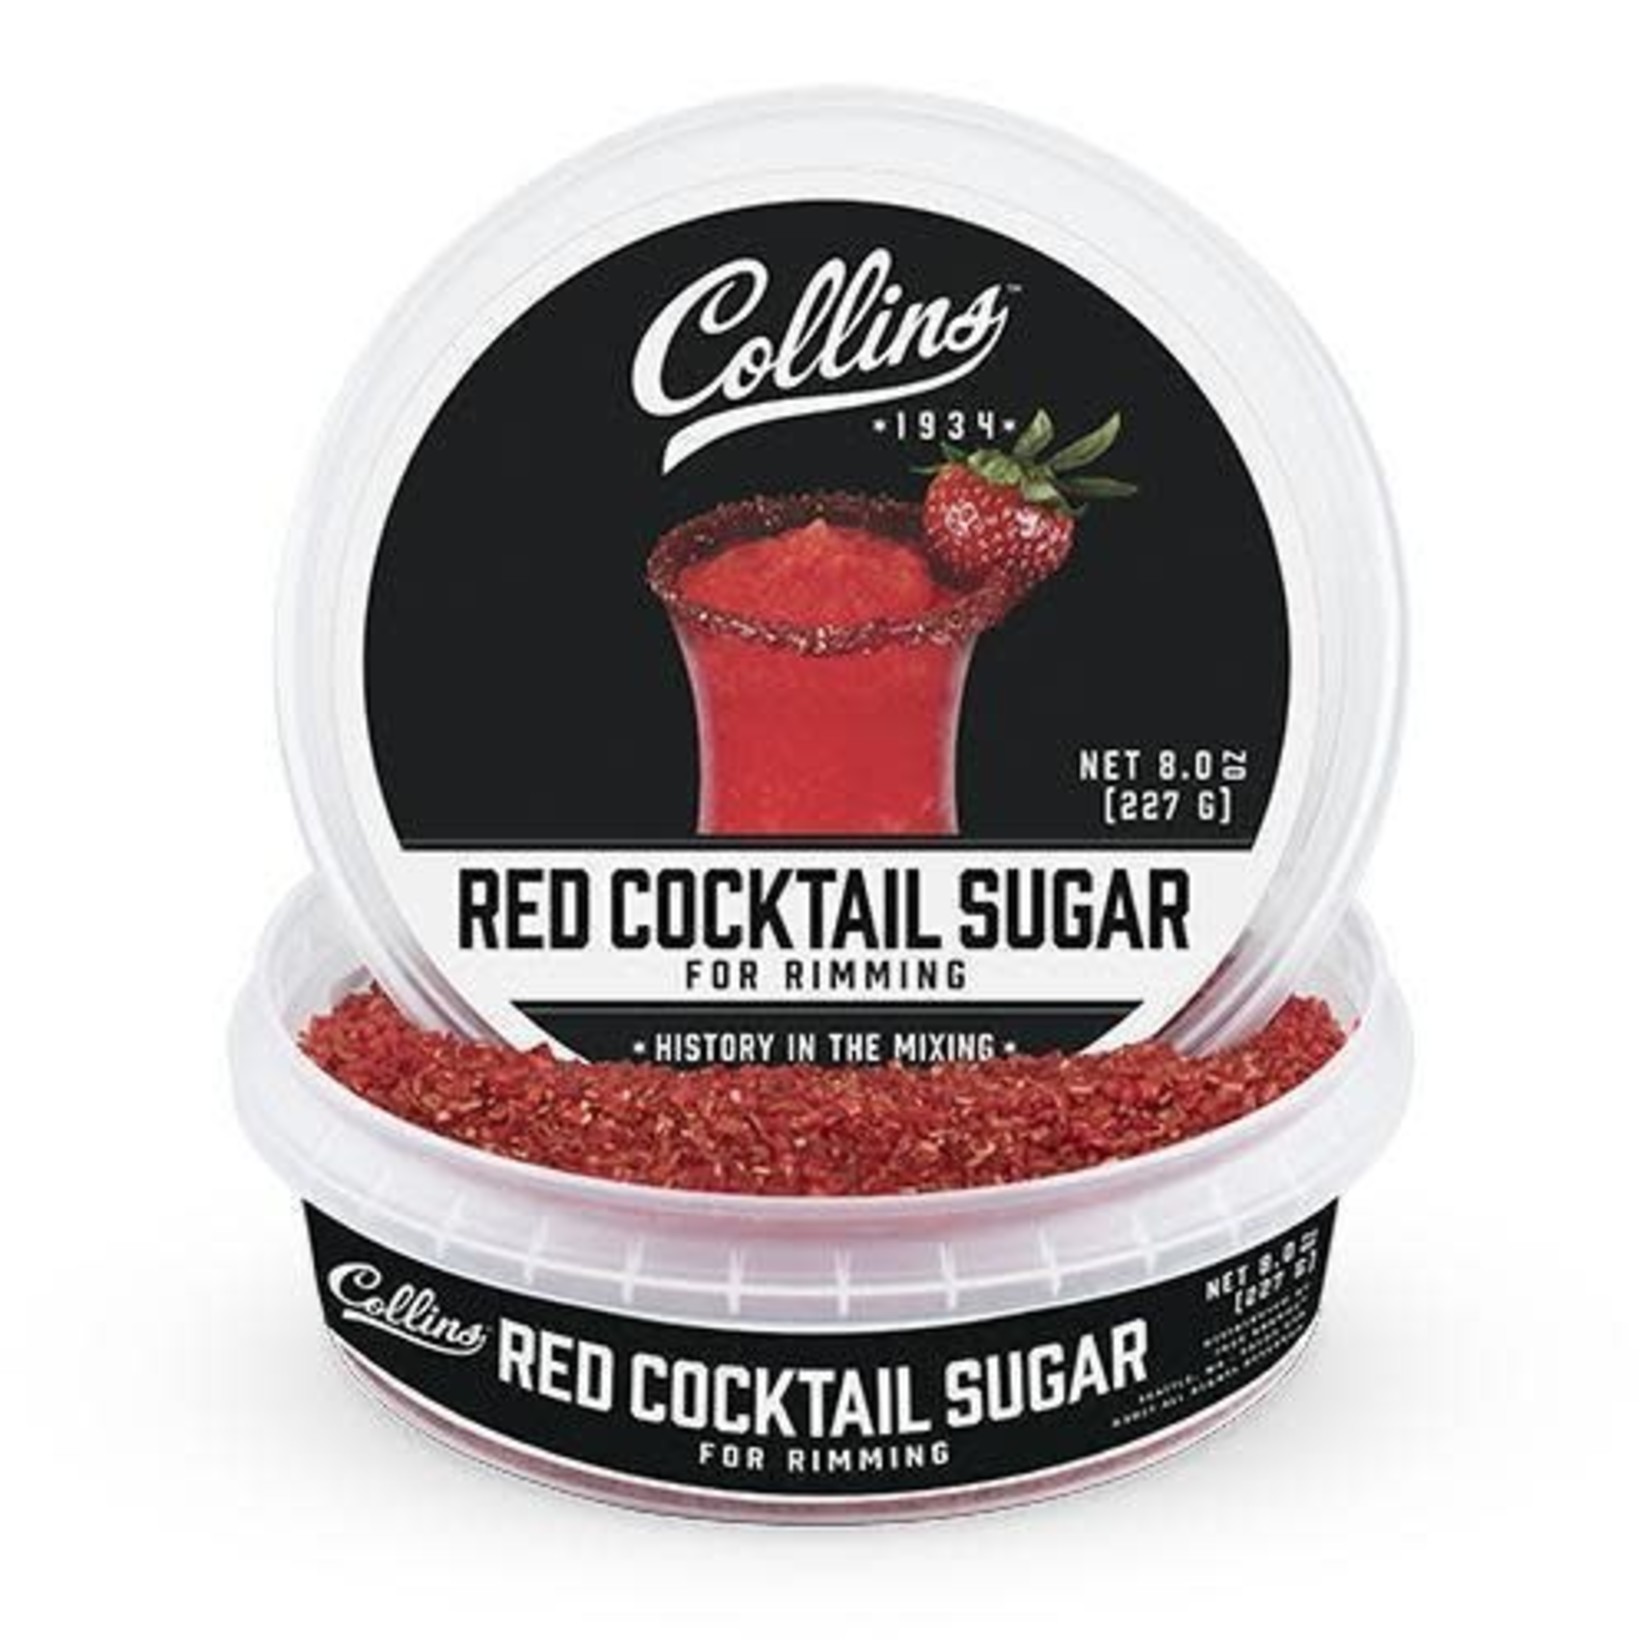 COLLINS RED COCKTAIL SUGAR SALT 7 OZ